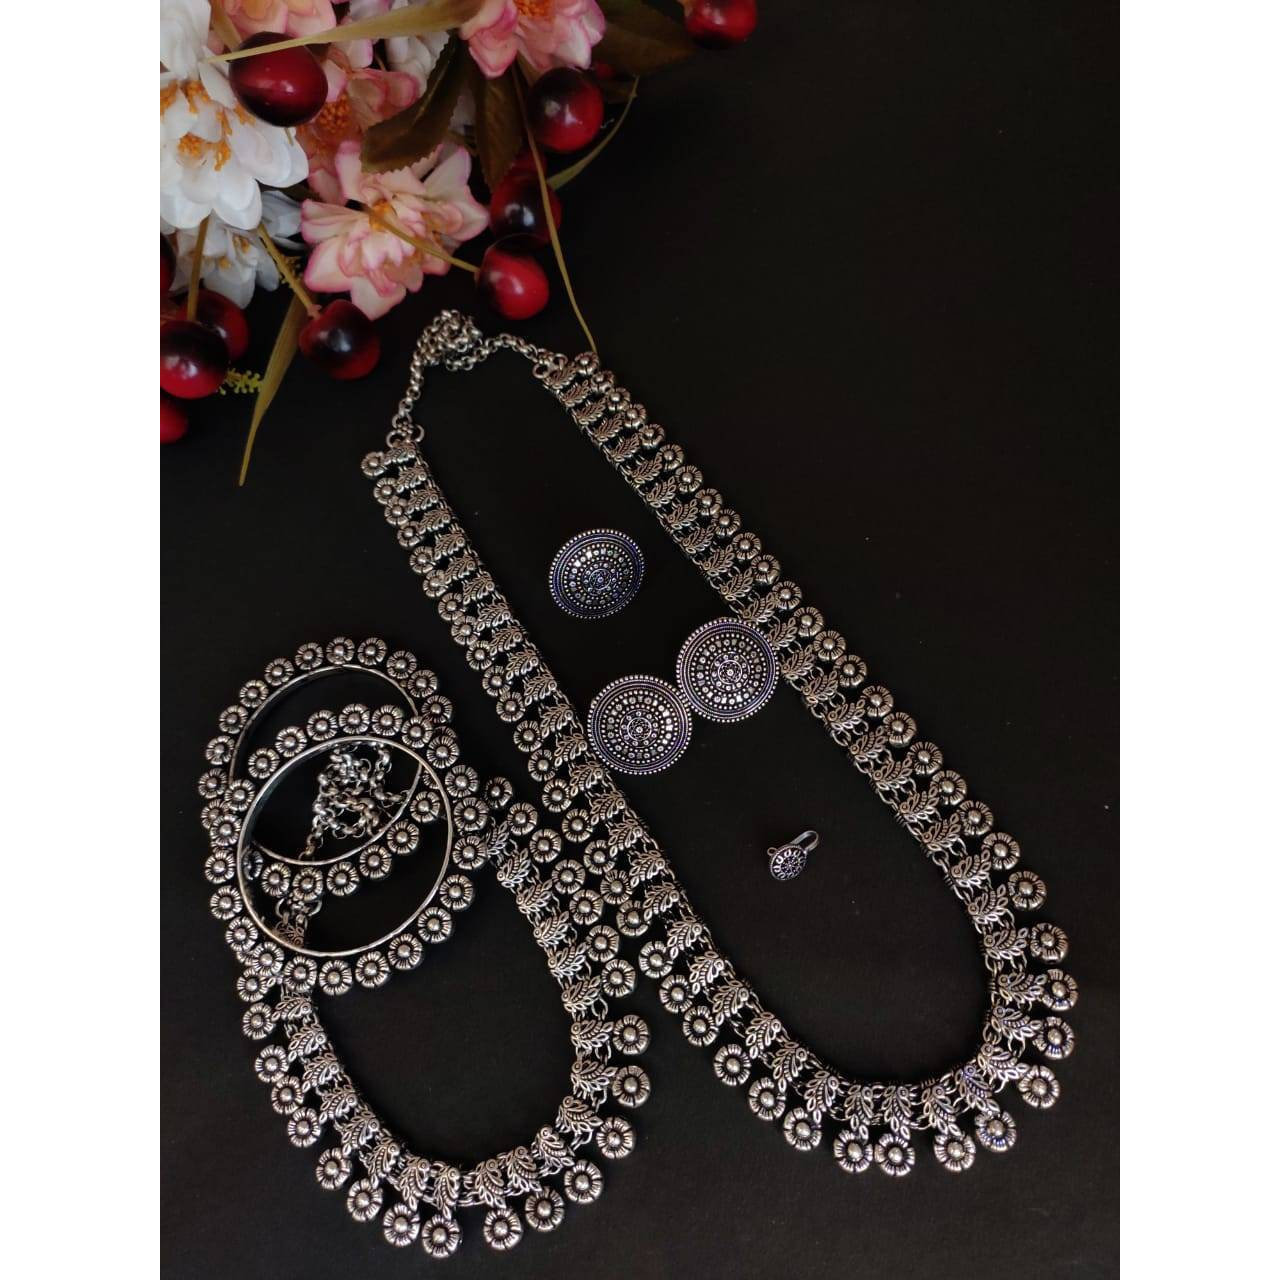 Long Necklace Set, Oxidised Necklace Set, Indian Ethnic  Jewelry, Oxidized Jewelry Set, Temple Jewelry, Wedding Jewelry, Bridal Jewelry